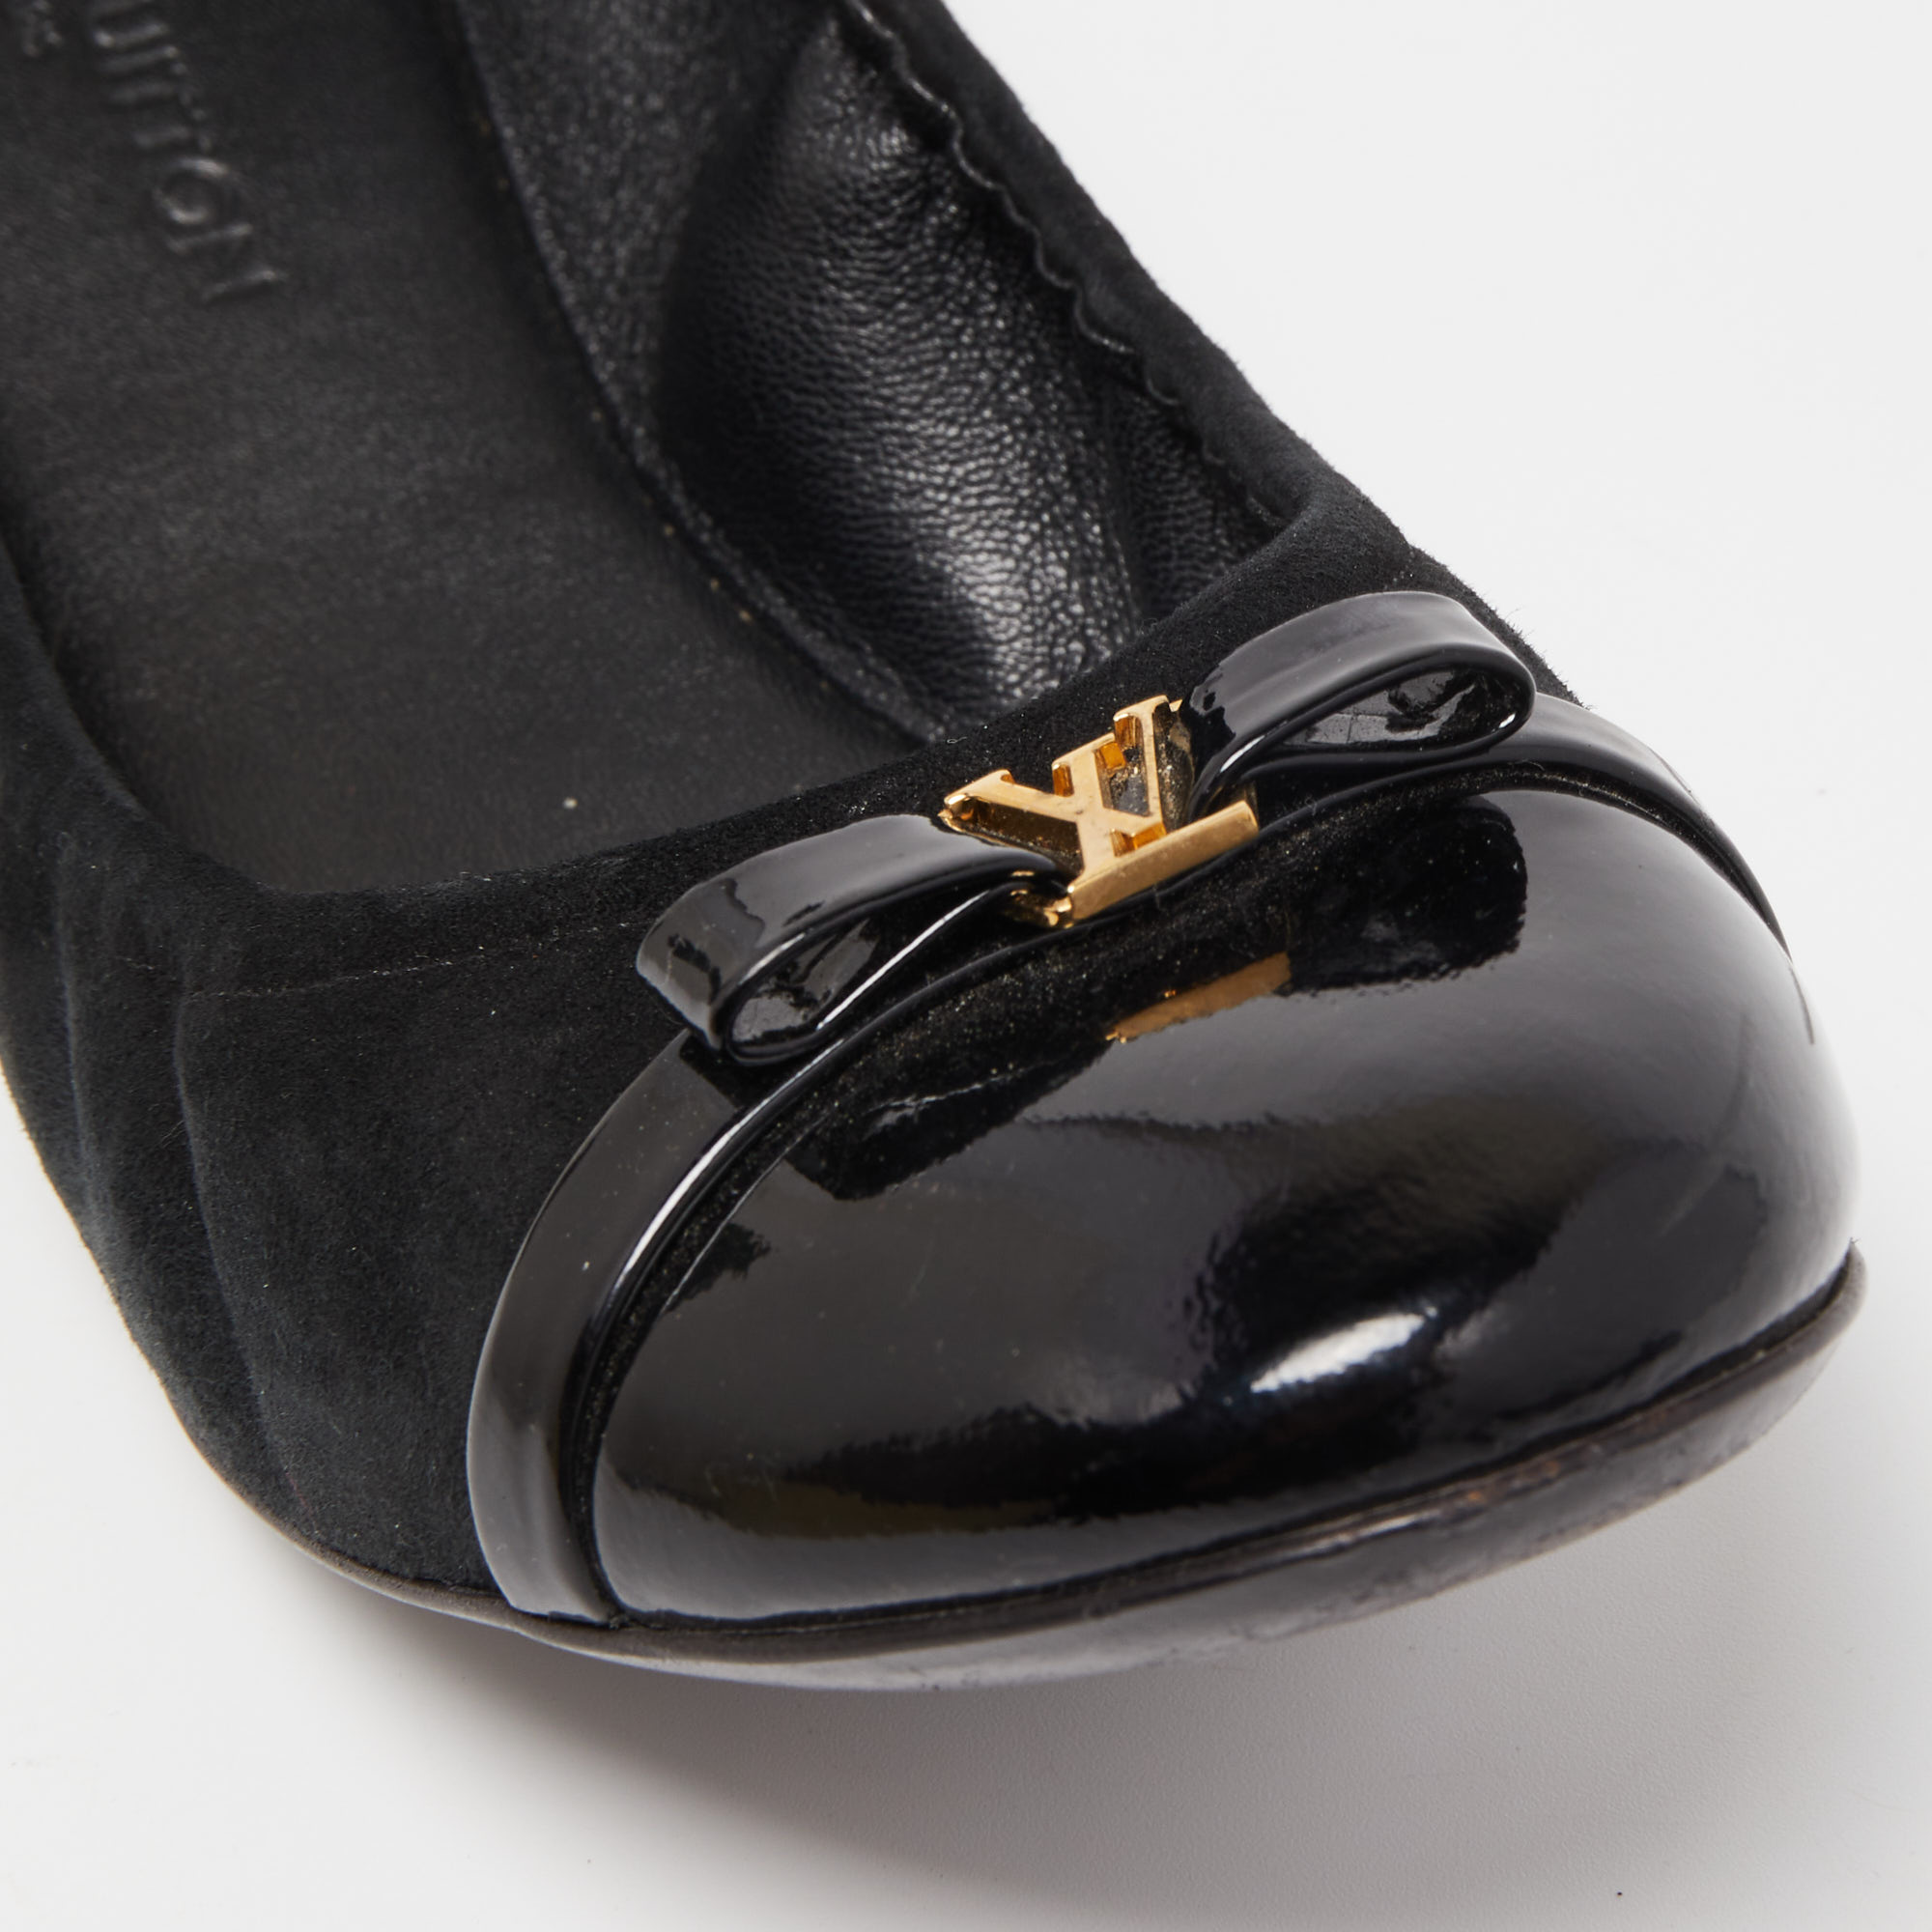 Louis Vuitton Black Suede And Patent Leather Elba Scrunch Ballet Flats Size 40